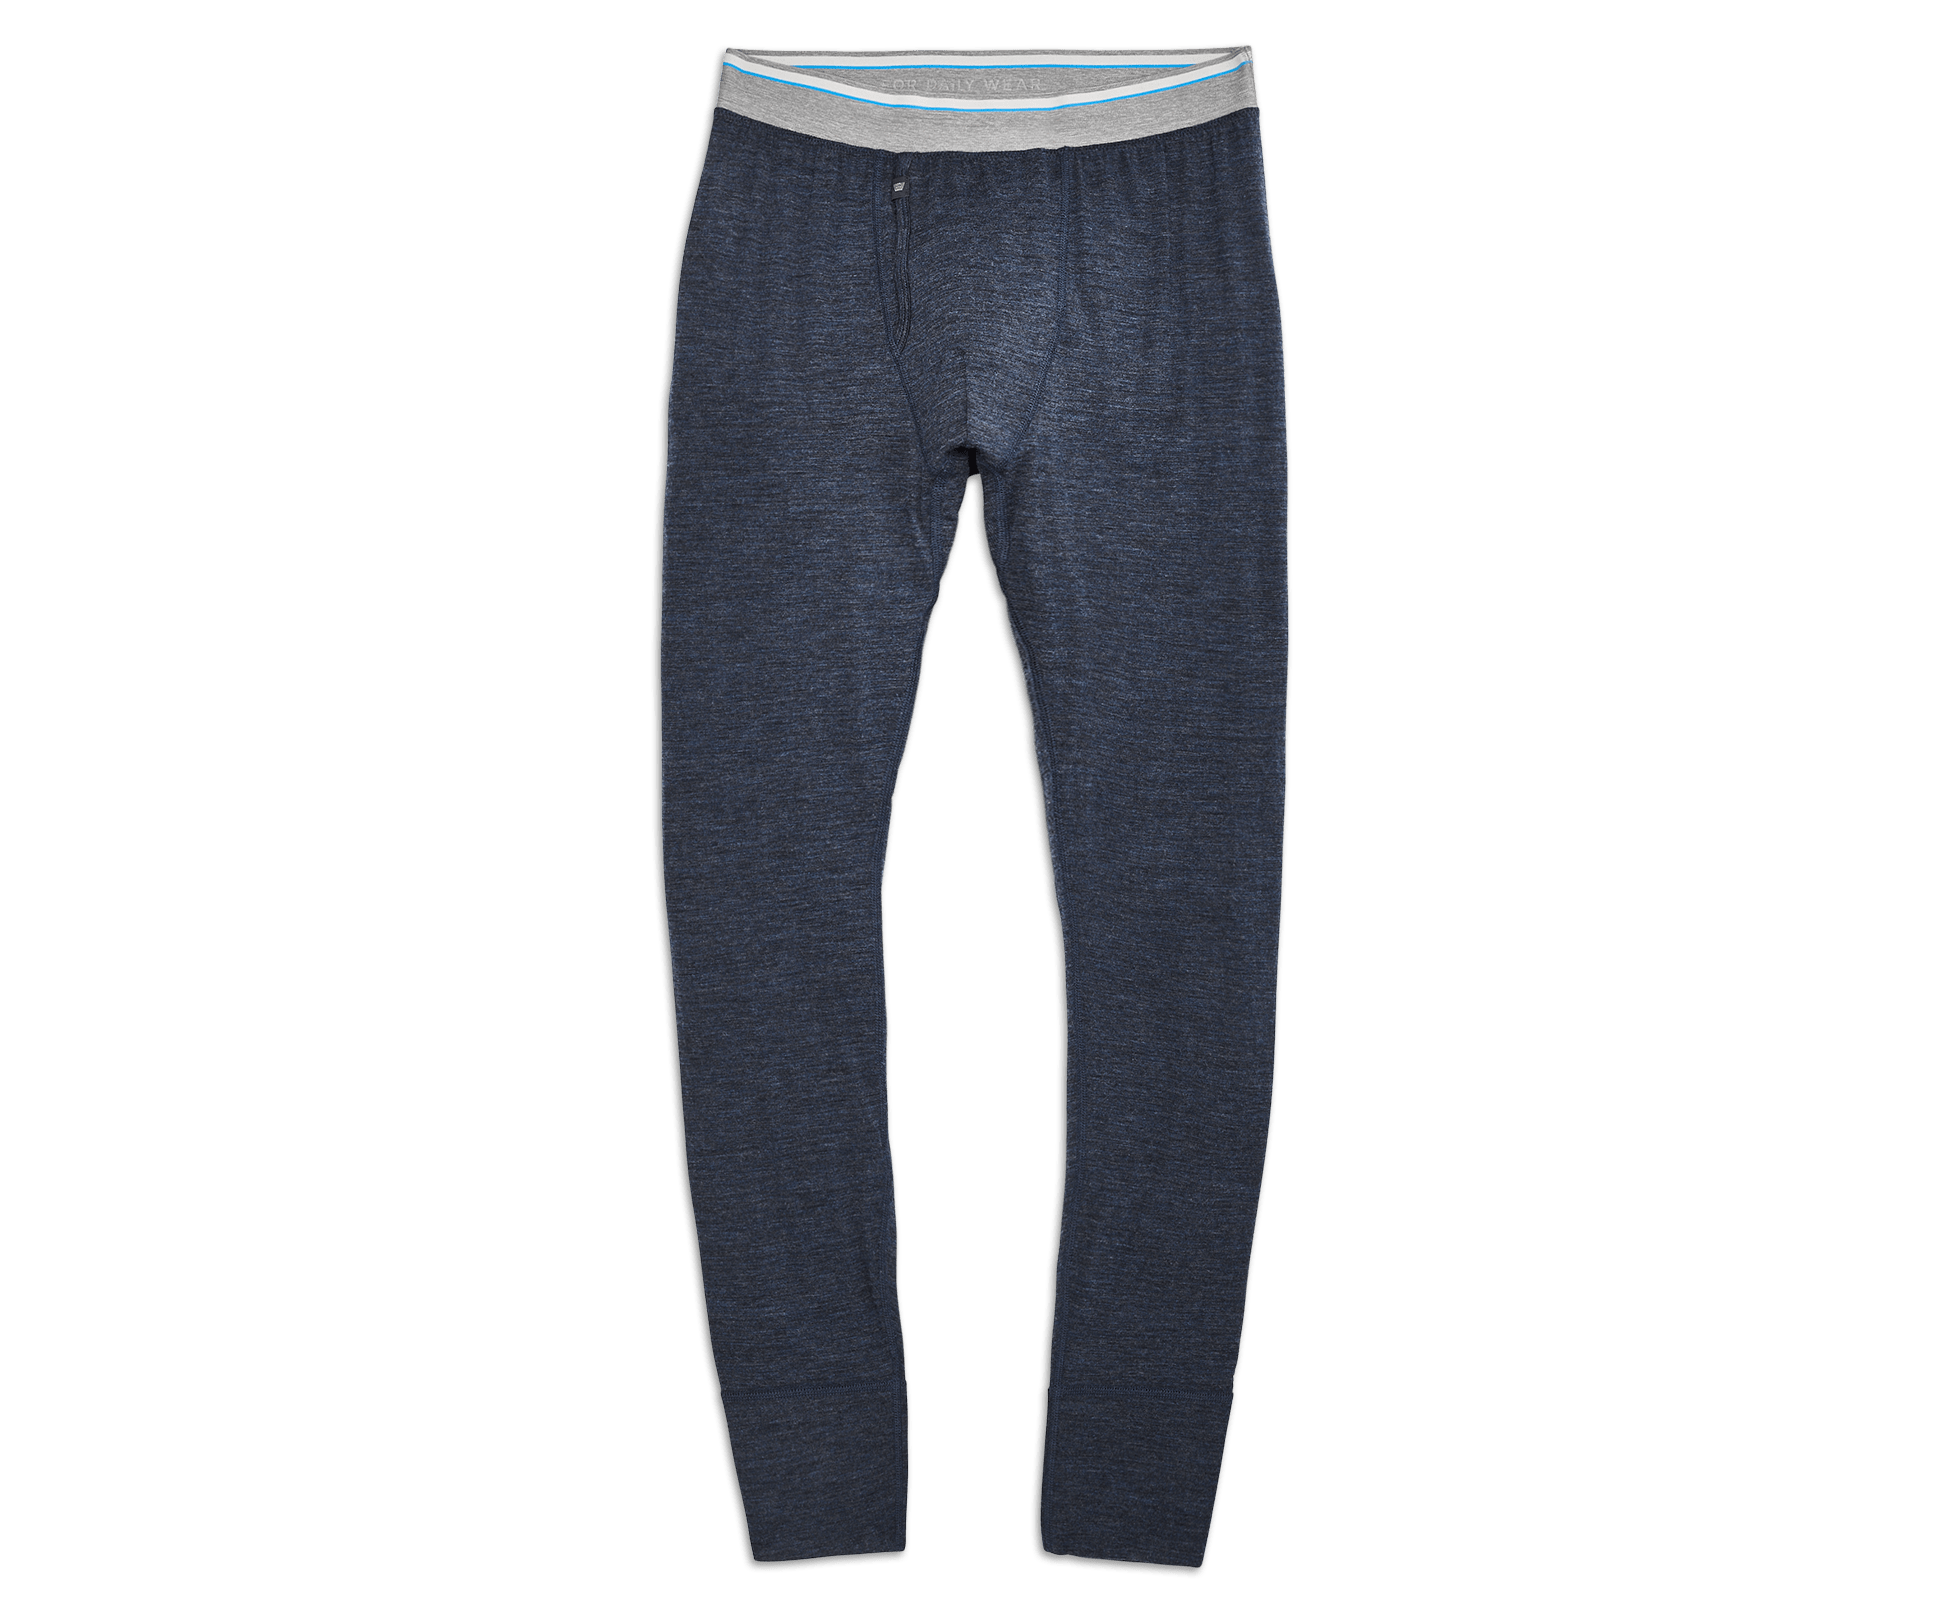 The Gentleman's Washable Cashmere Lounge Pants